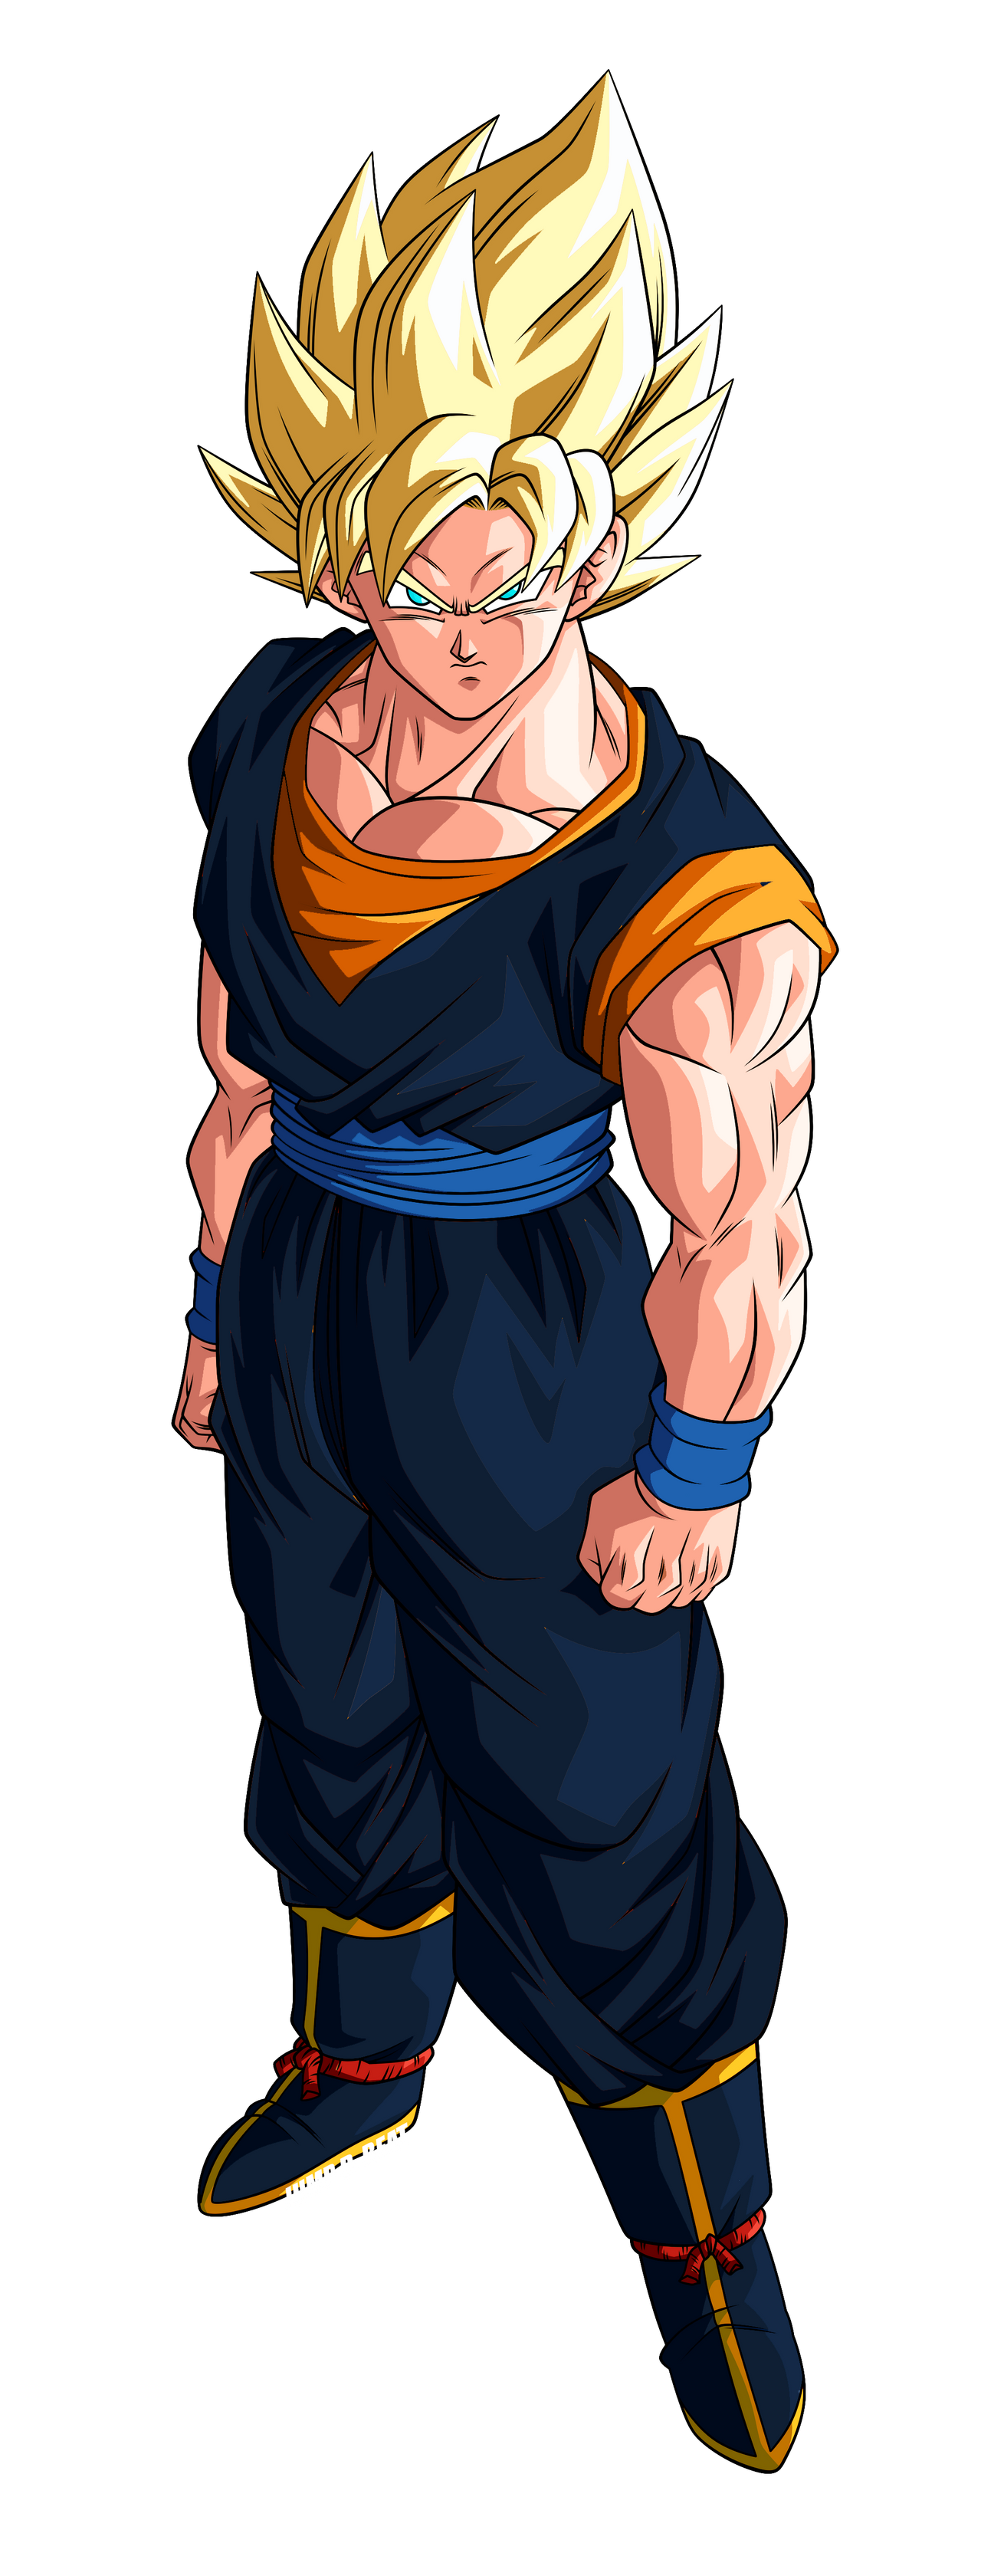 Goku super sayajin 4 by HBORUNO on DeviantArt, quantos super